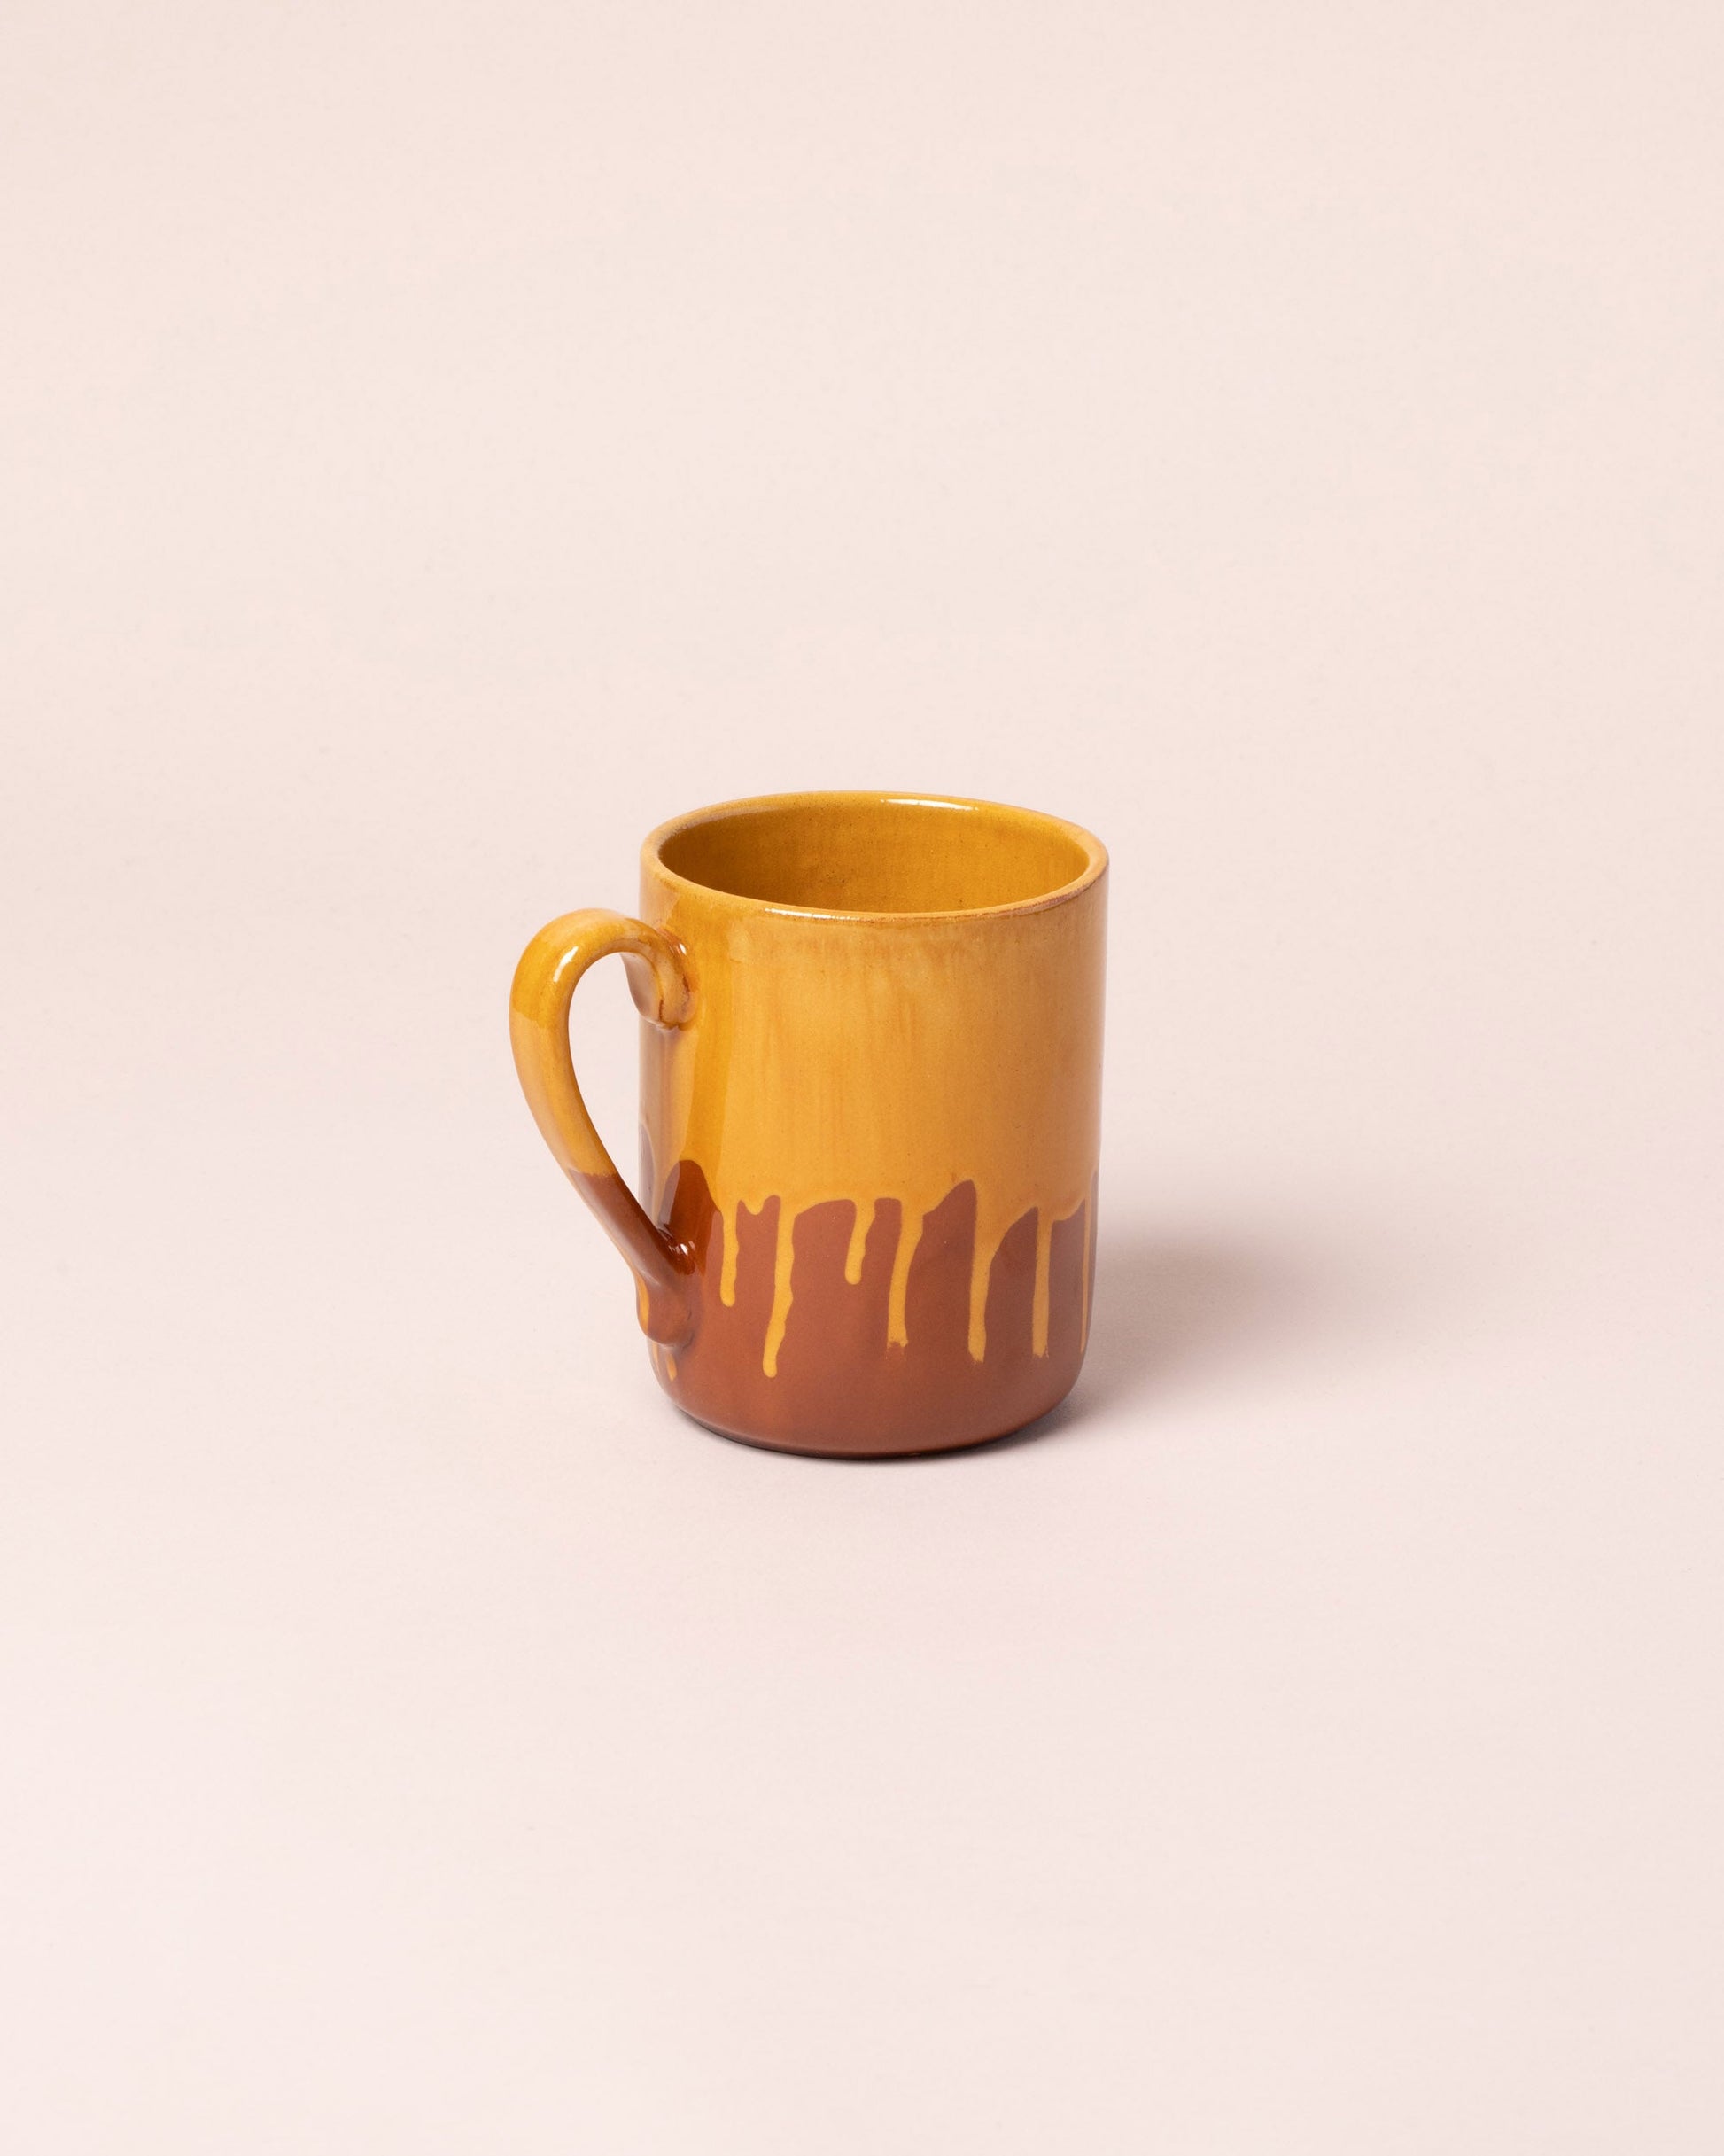 La Ceramica Vincenzo Del Monaco Caramel Yellow Coffee Mug on light color background.